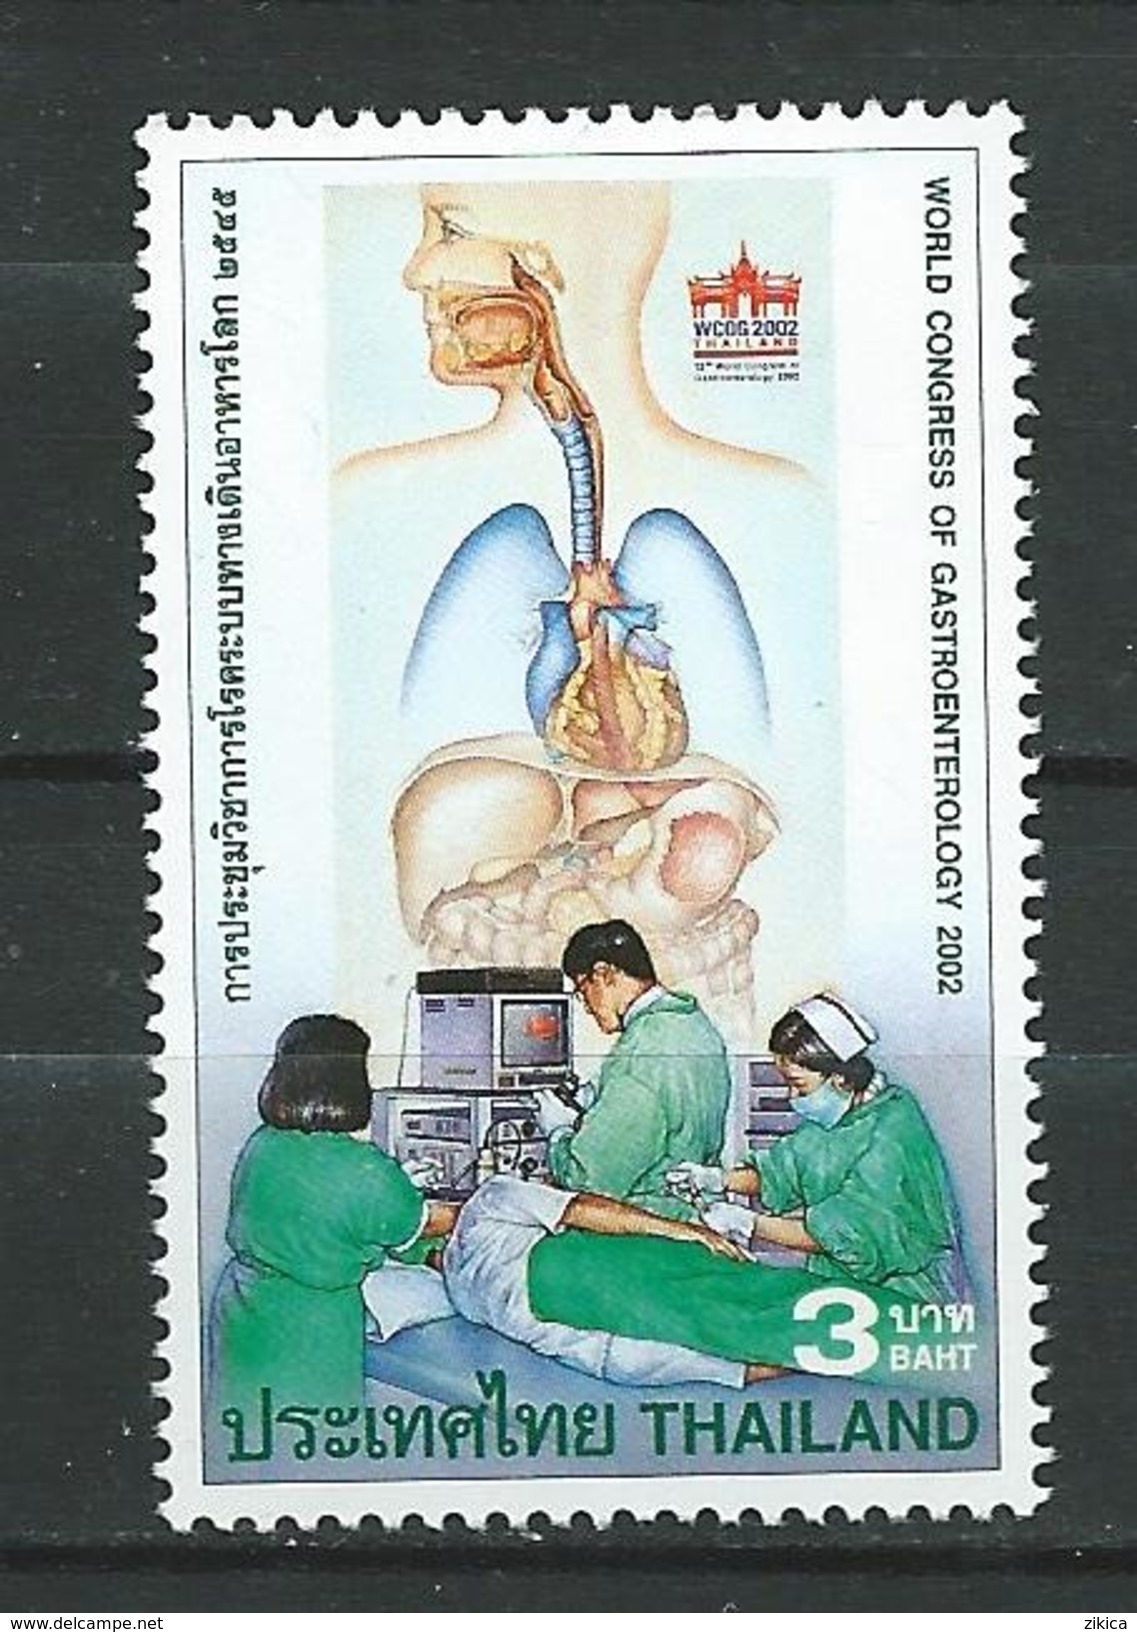 Thailand 2002 The 12th World Congress Of Gastroenterology, Thailand.medicine.MNH - Thaïlande